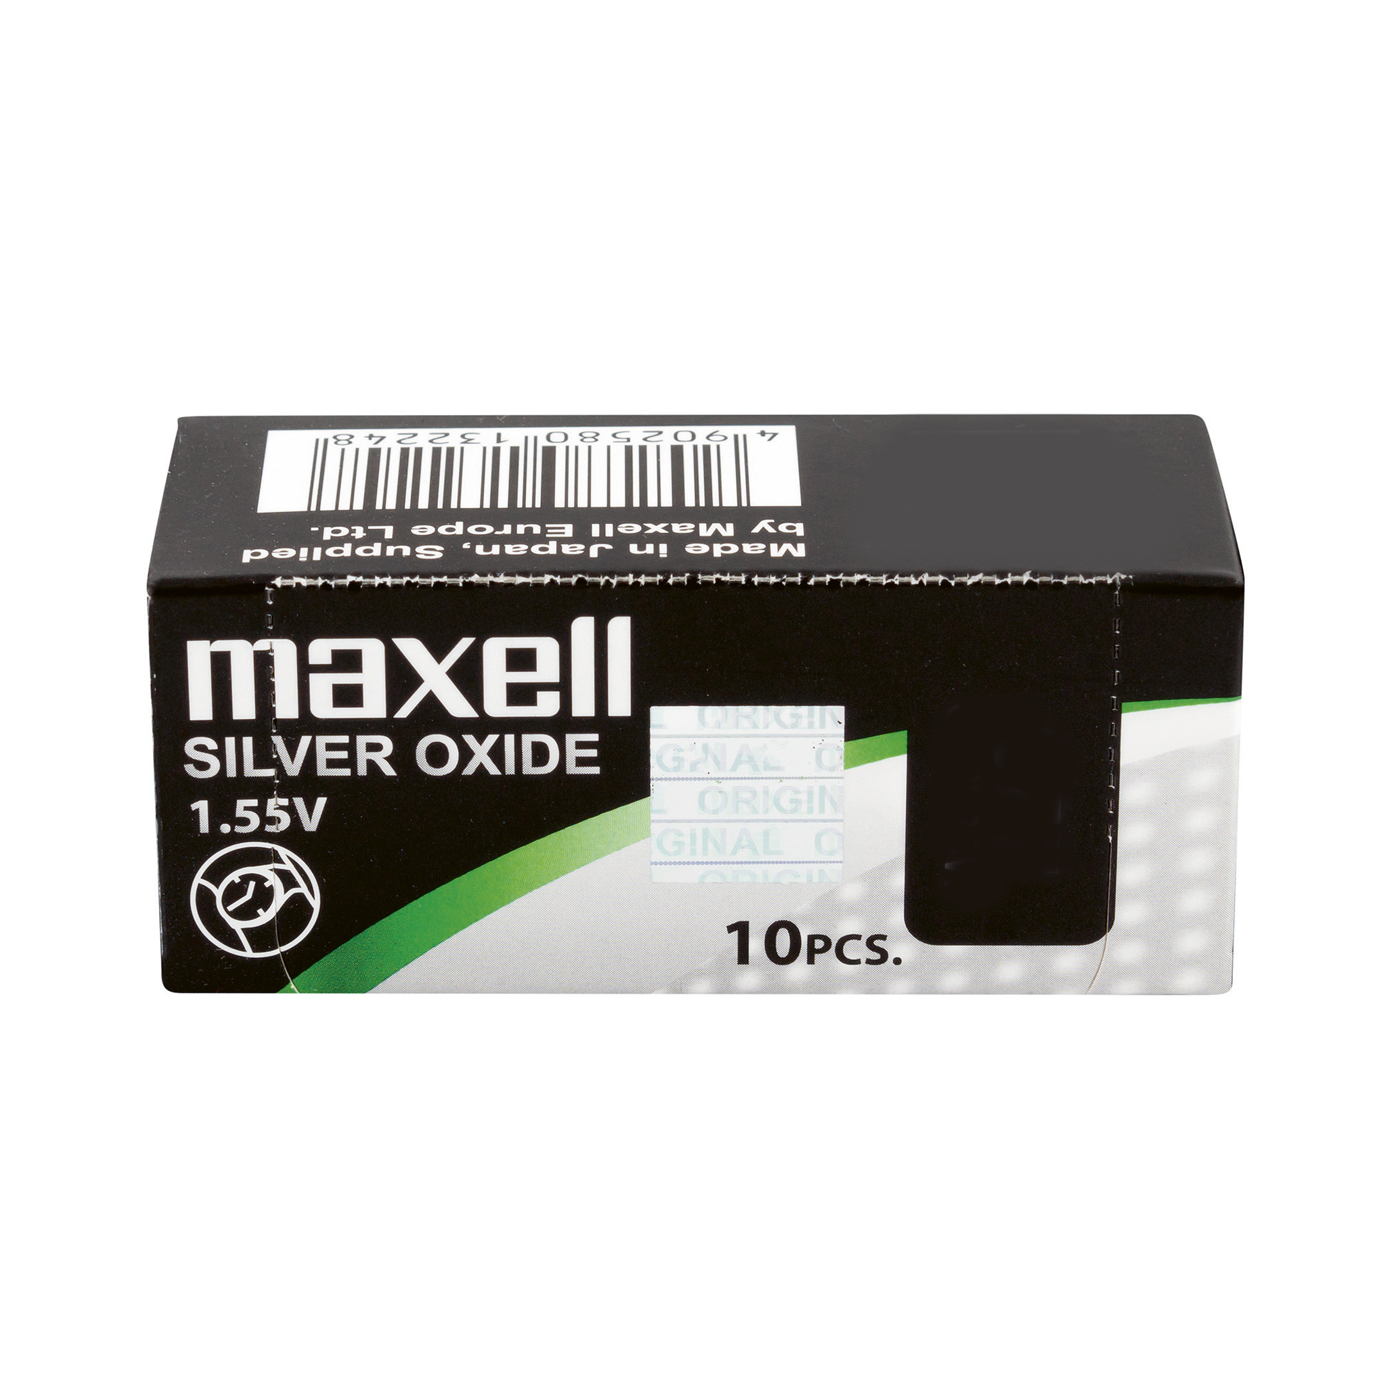 Maxell Uhrenbatterien 379, SR 521 SW - 10 Stück